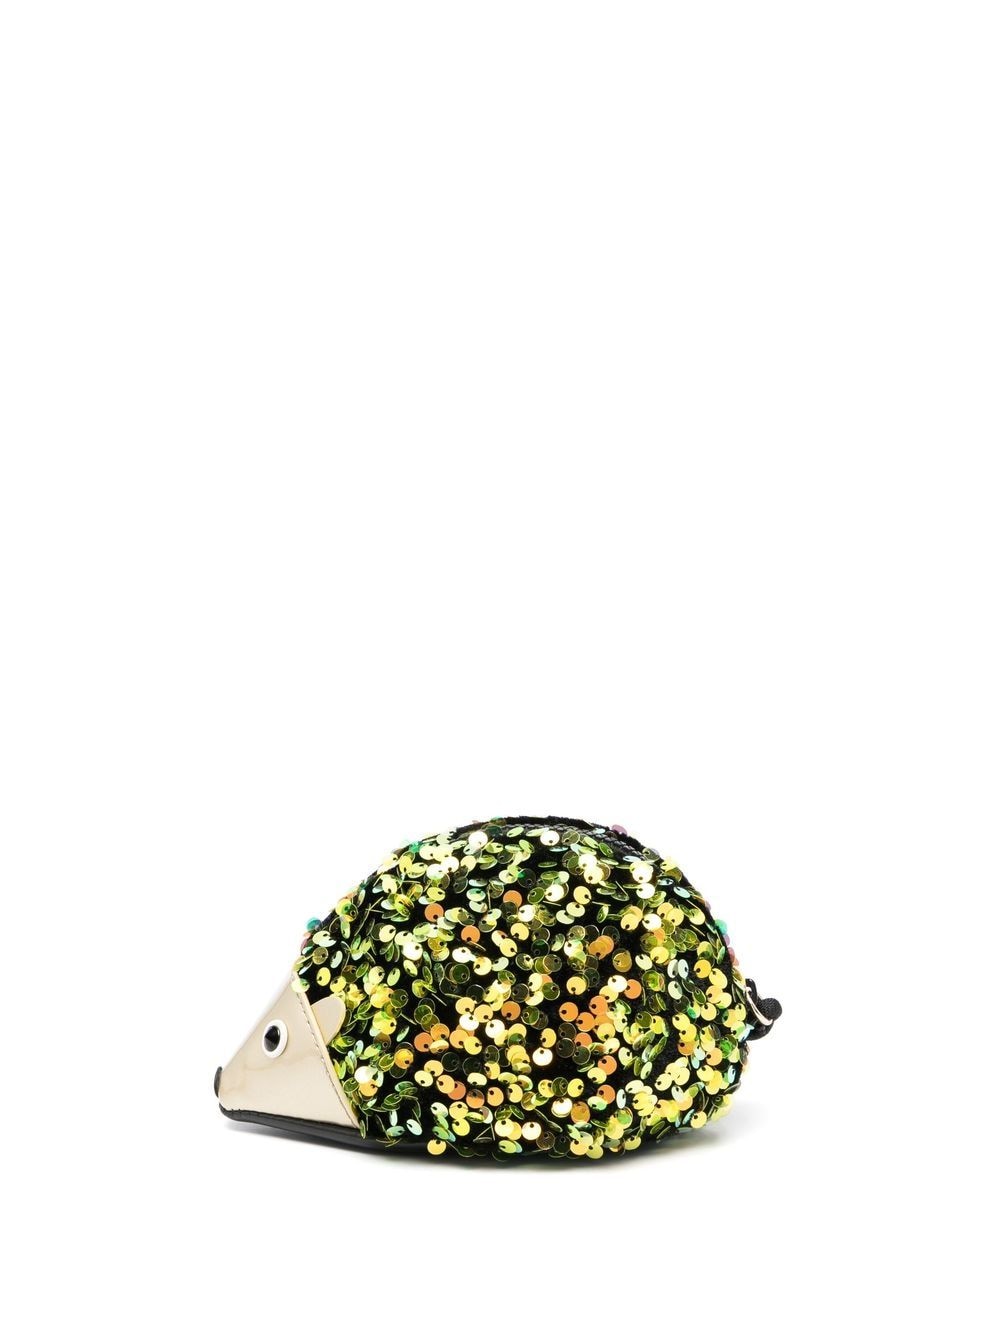 Image 2 of Furla mouse sequin-embellished purse